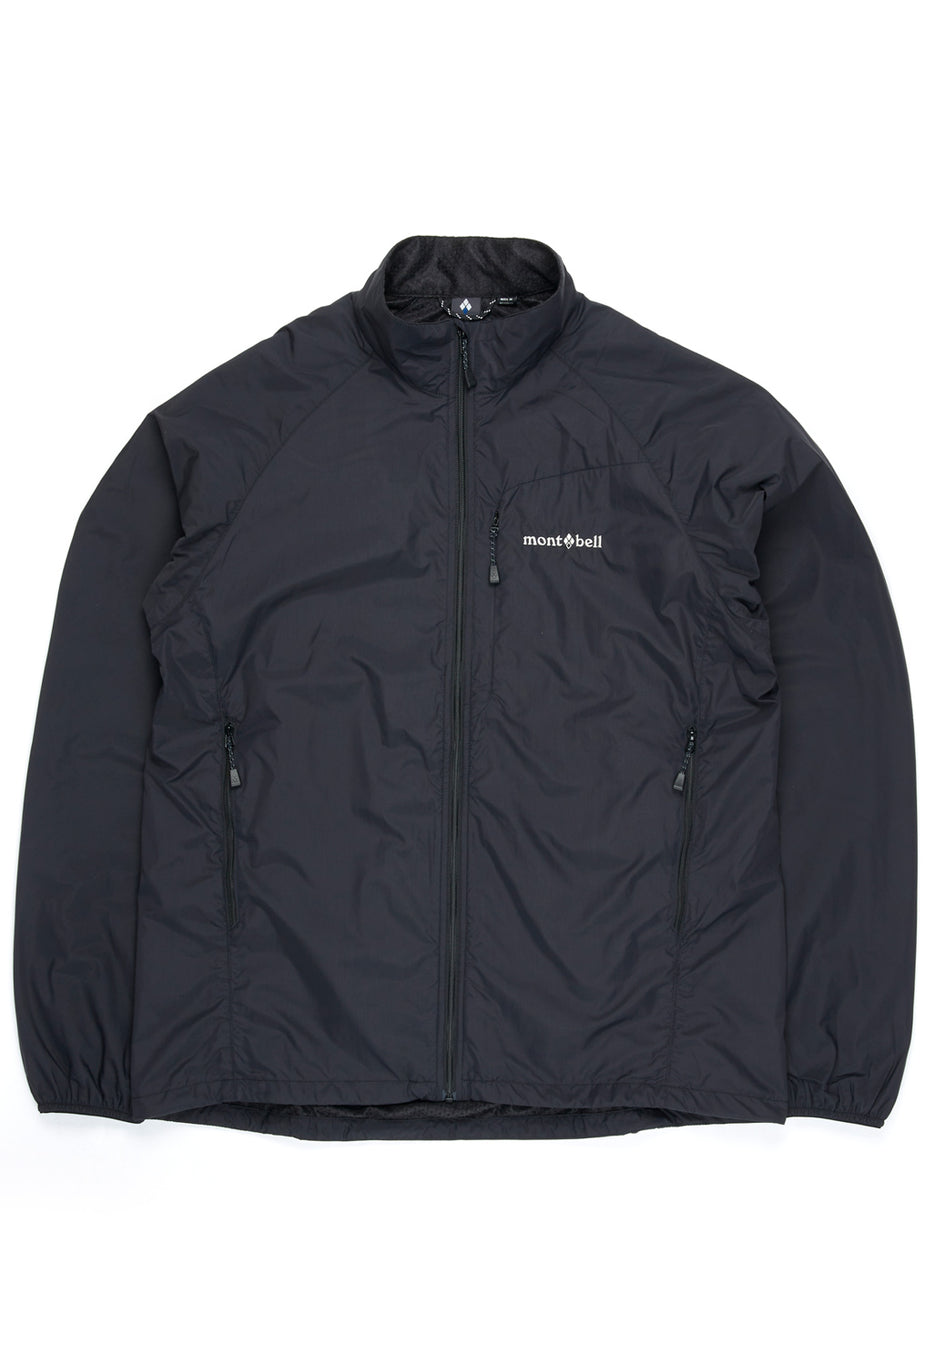 Montbell Men's Superior Down Jacket - Dark Blue – Outsiders Store UK